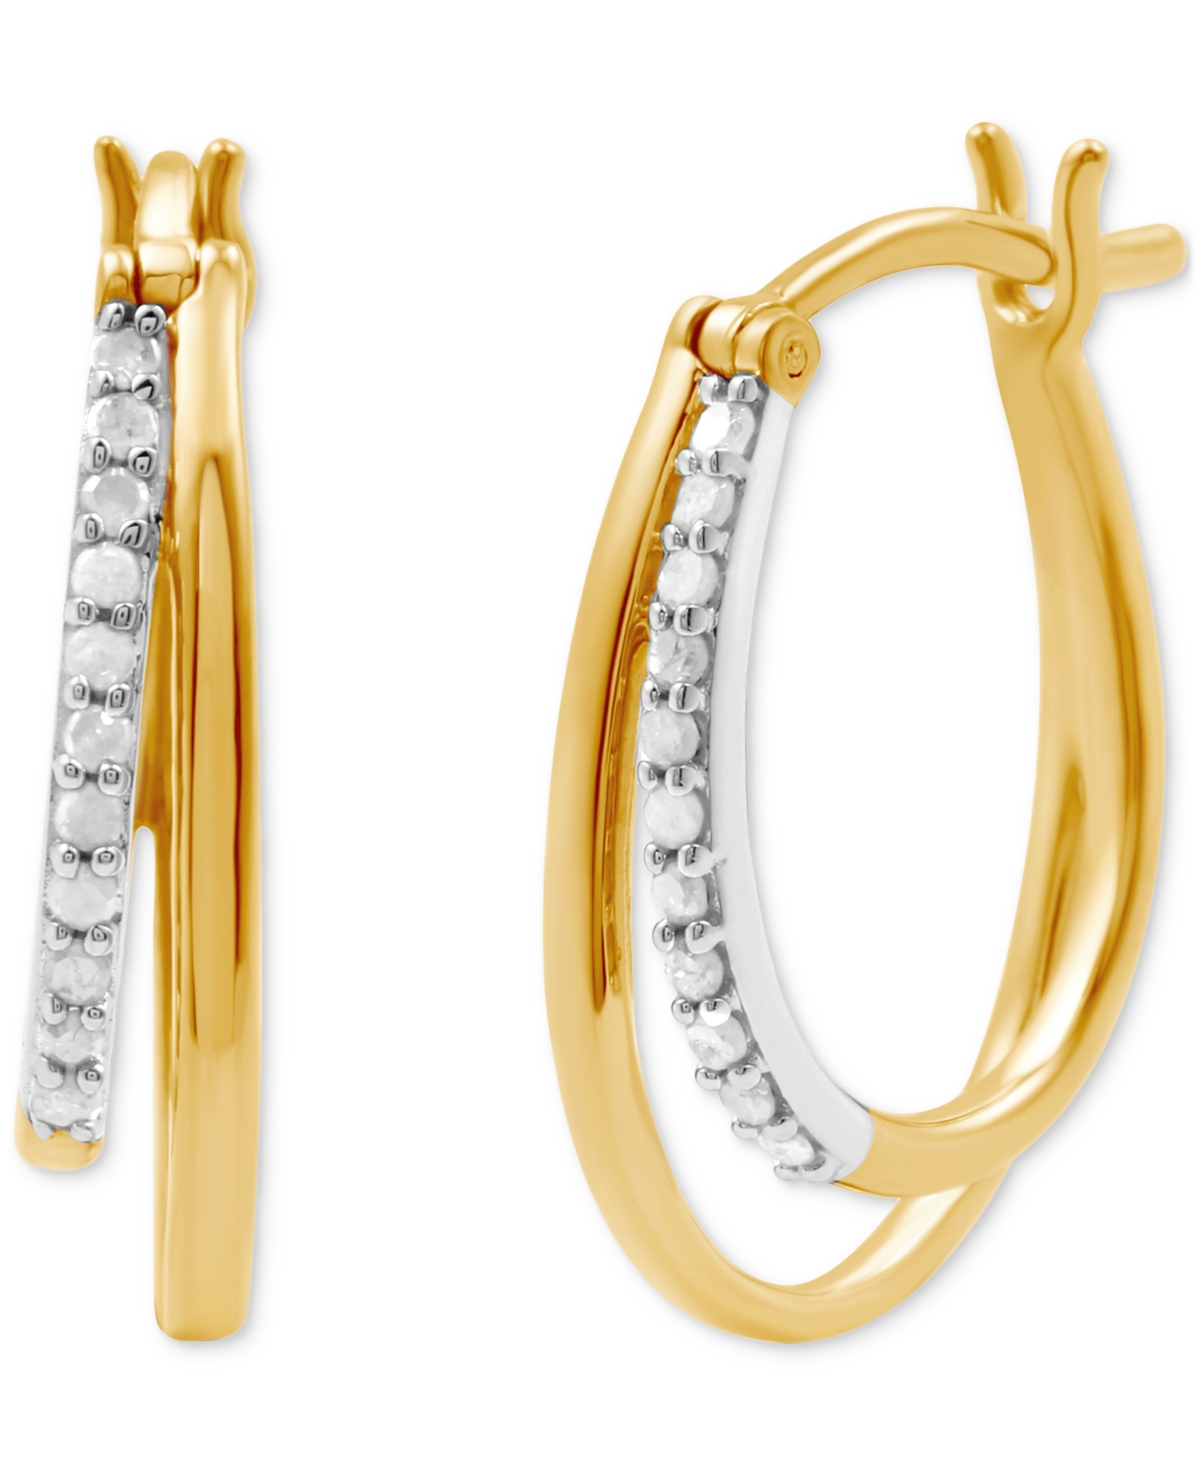 Diamond & Polished Double Oval Hoop Earrings (1/4 ct. t.w.) in Sterling Silver & 14k Gold-Plate - Sterling Silver  Gold-Plate